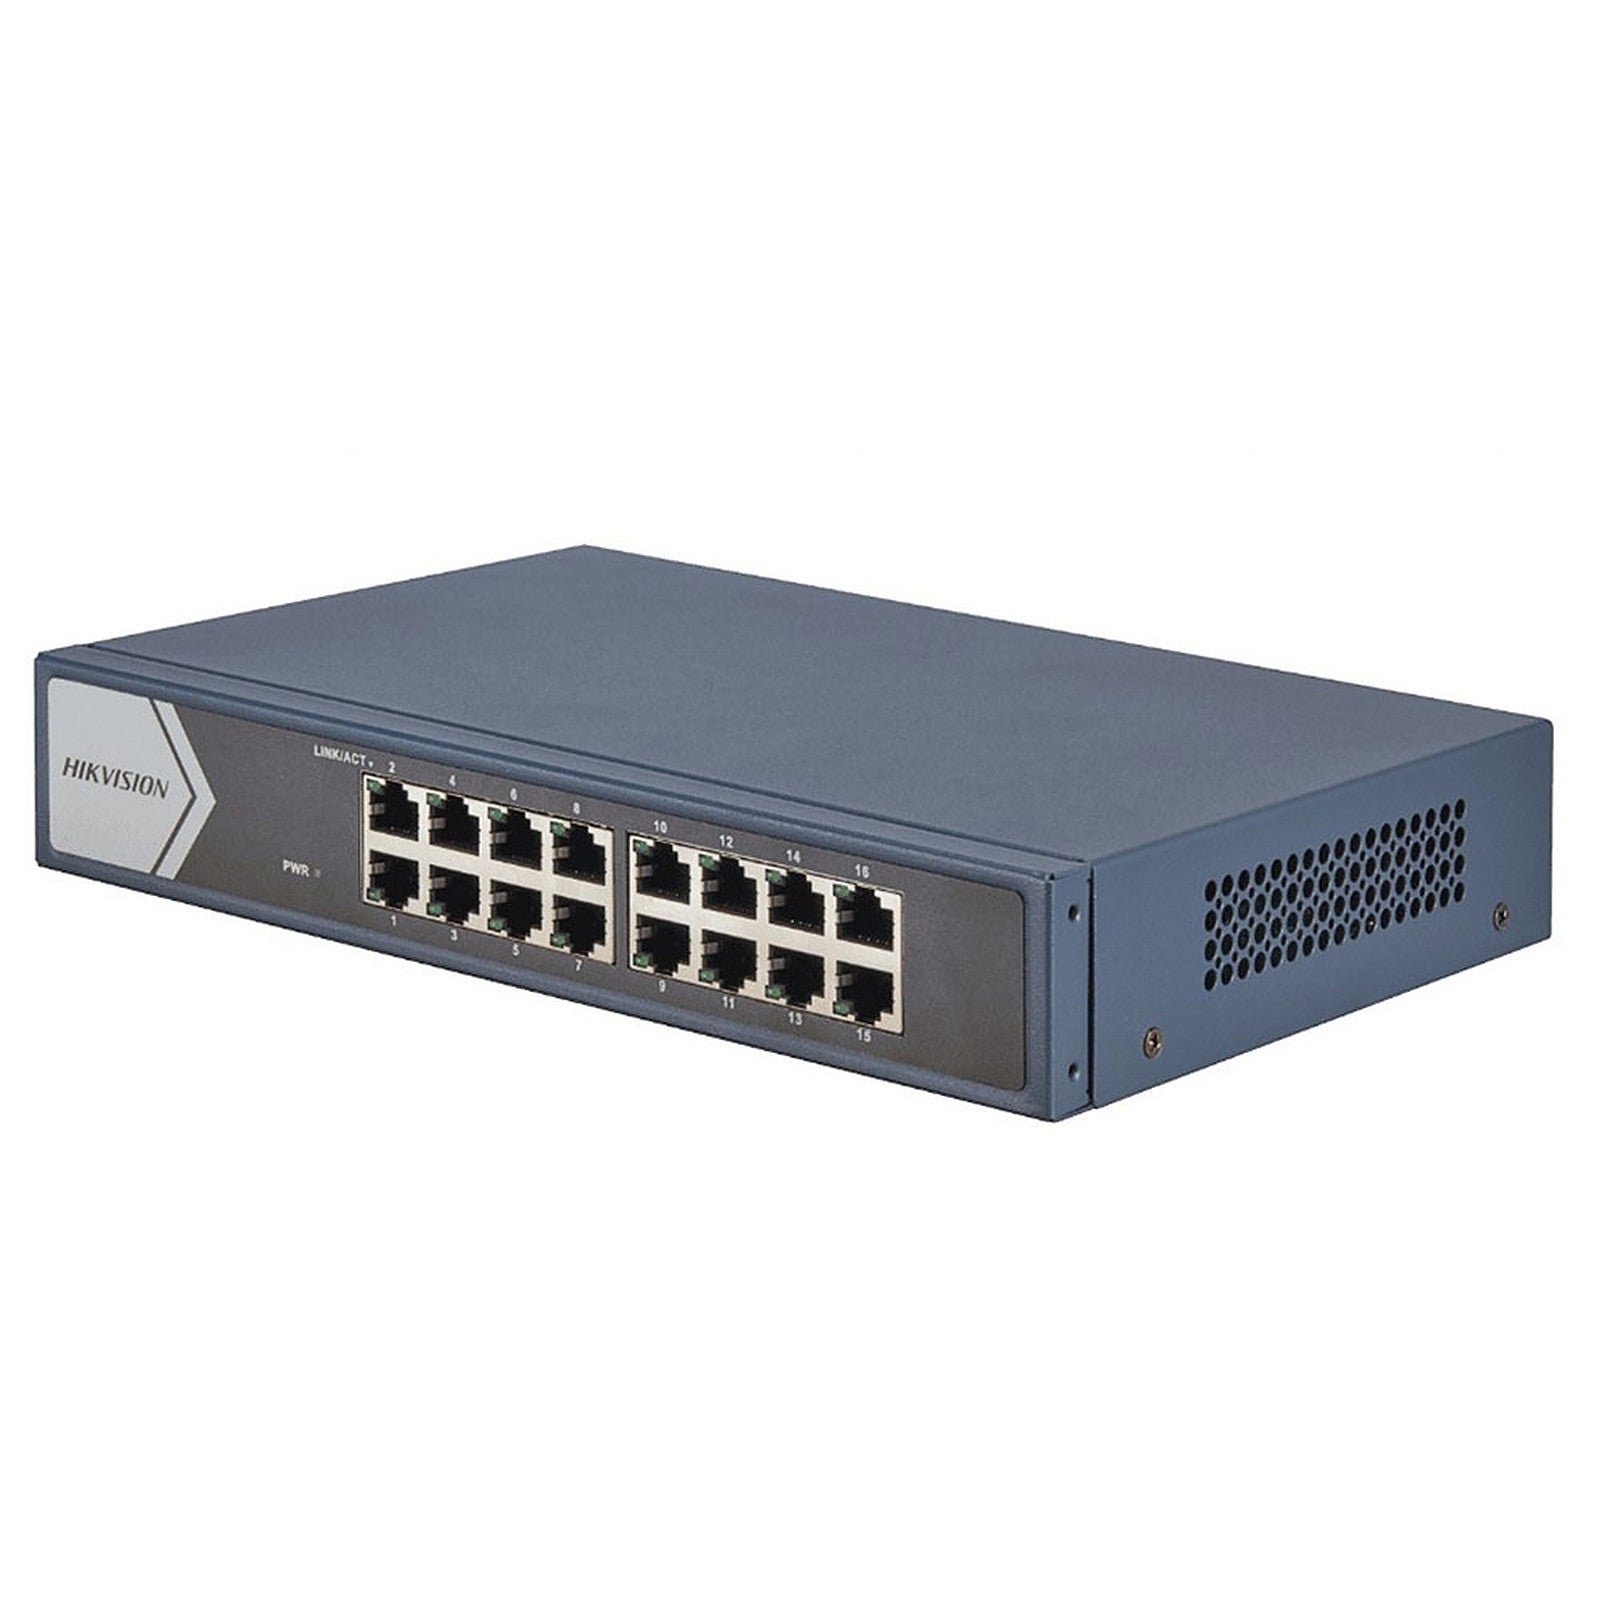 Hikvision - DS-3E0516-E(B) - Switch 16 ports Gigabit